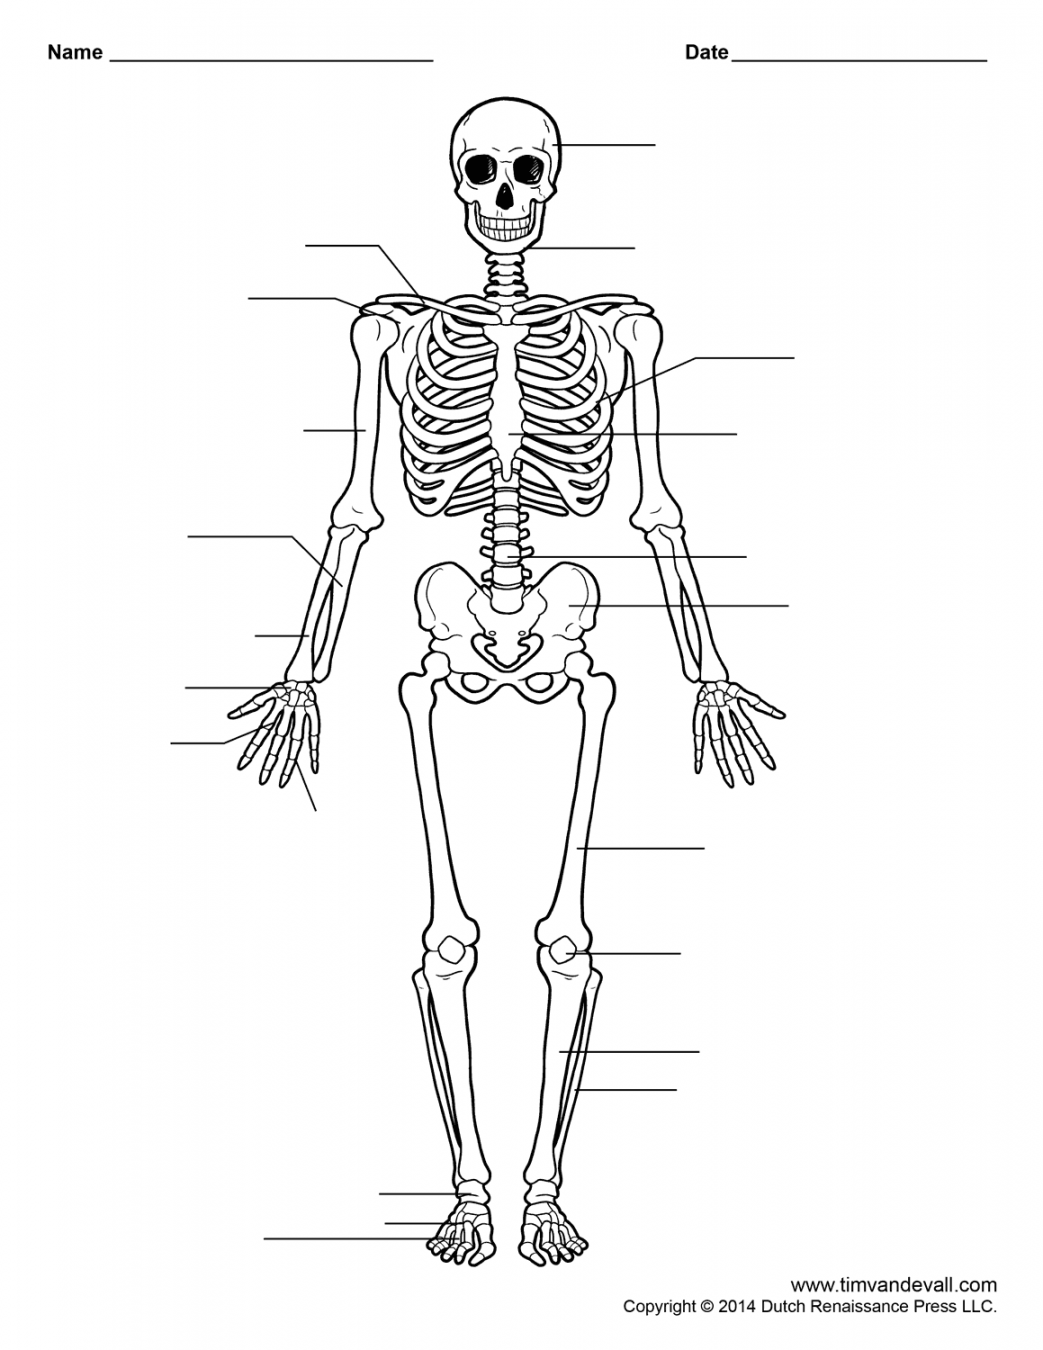 Printable Human Skeleton Worksheet for Students and Teachers